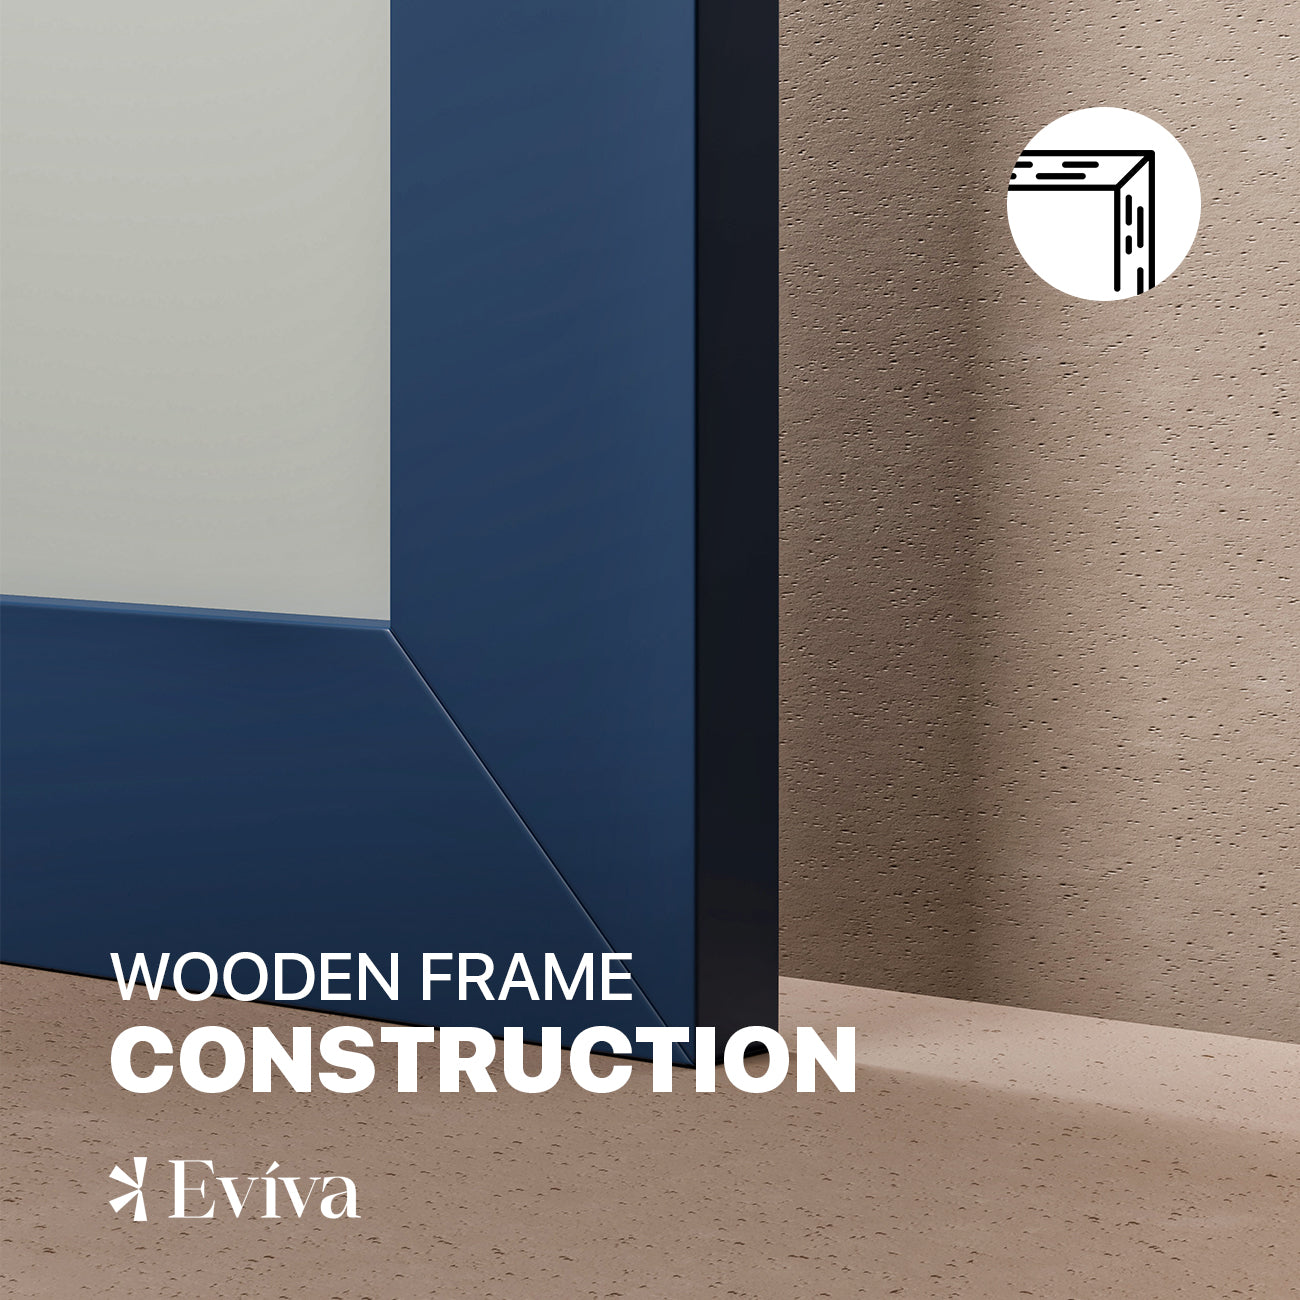 EVIVA Acclaim 48X30 Transitional Blue Bathroom Mirror